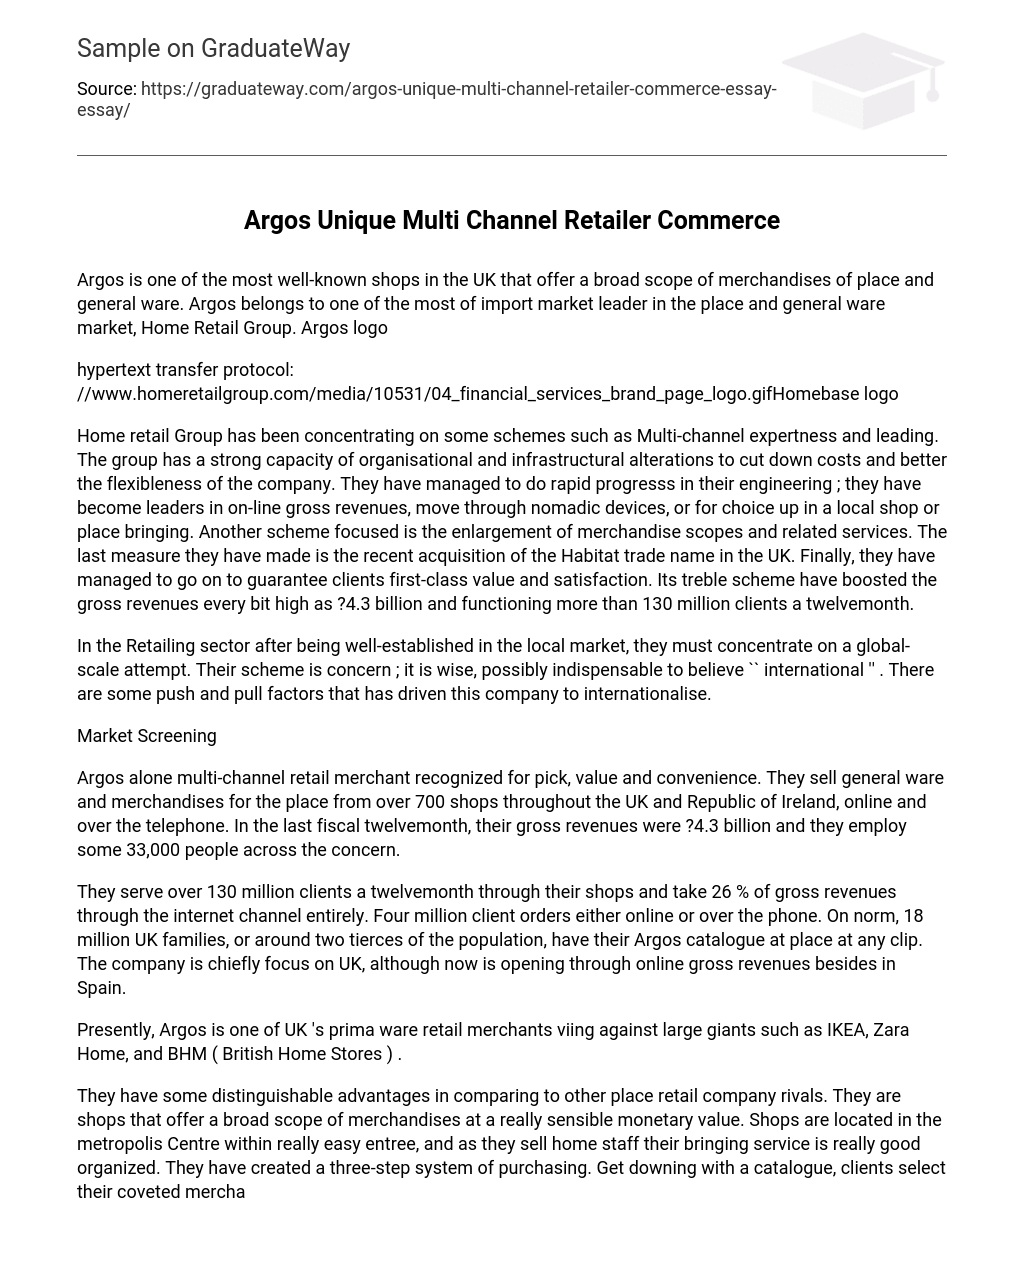 Argos Unique Multi Channel Retailer Commerce